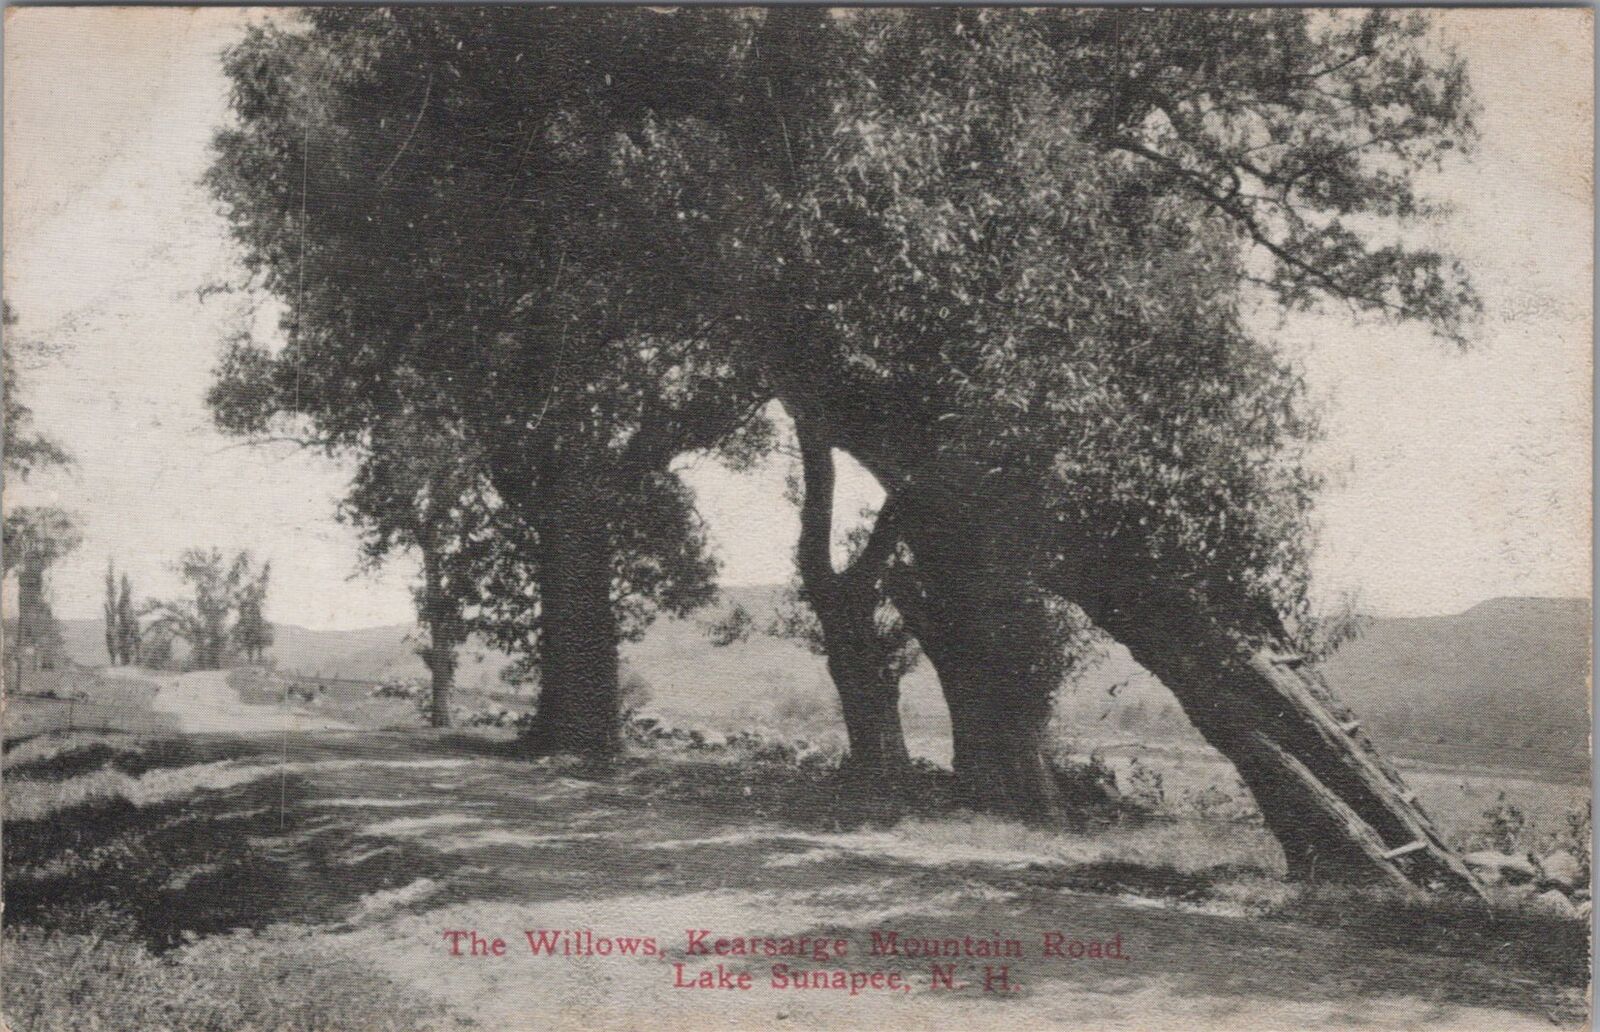 The Willows, Kearsarge Mountain Road, Lake Sunapee, New Hampshire Postcard